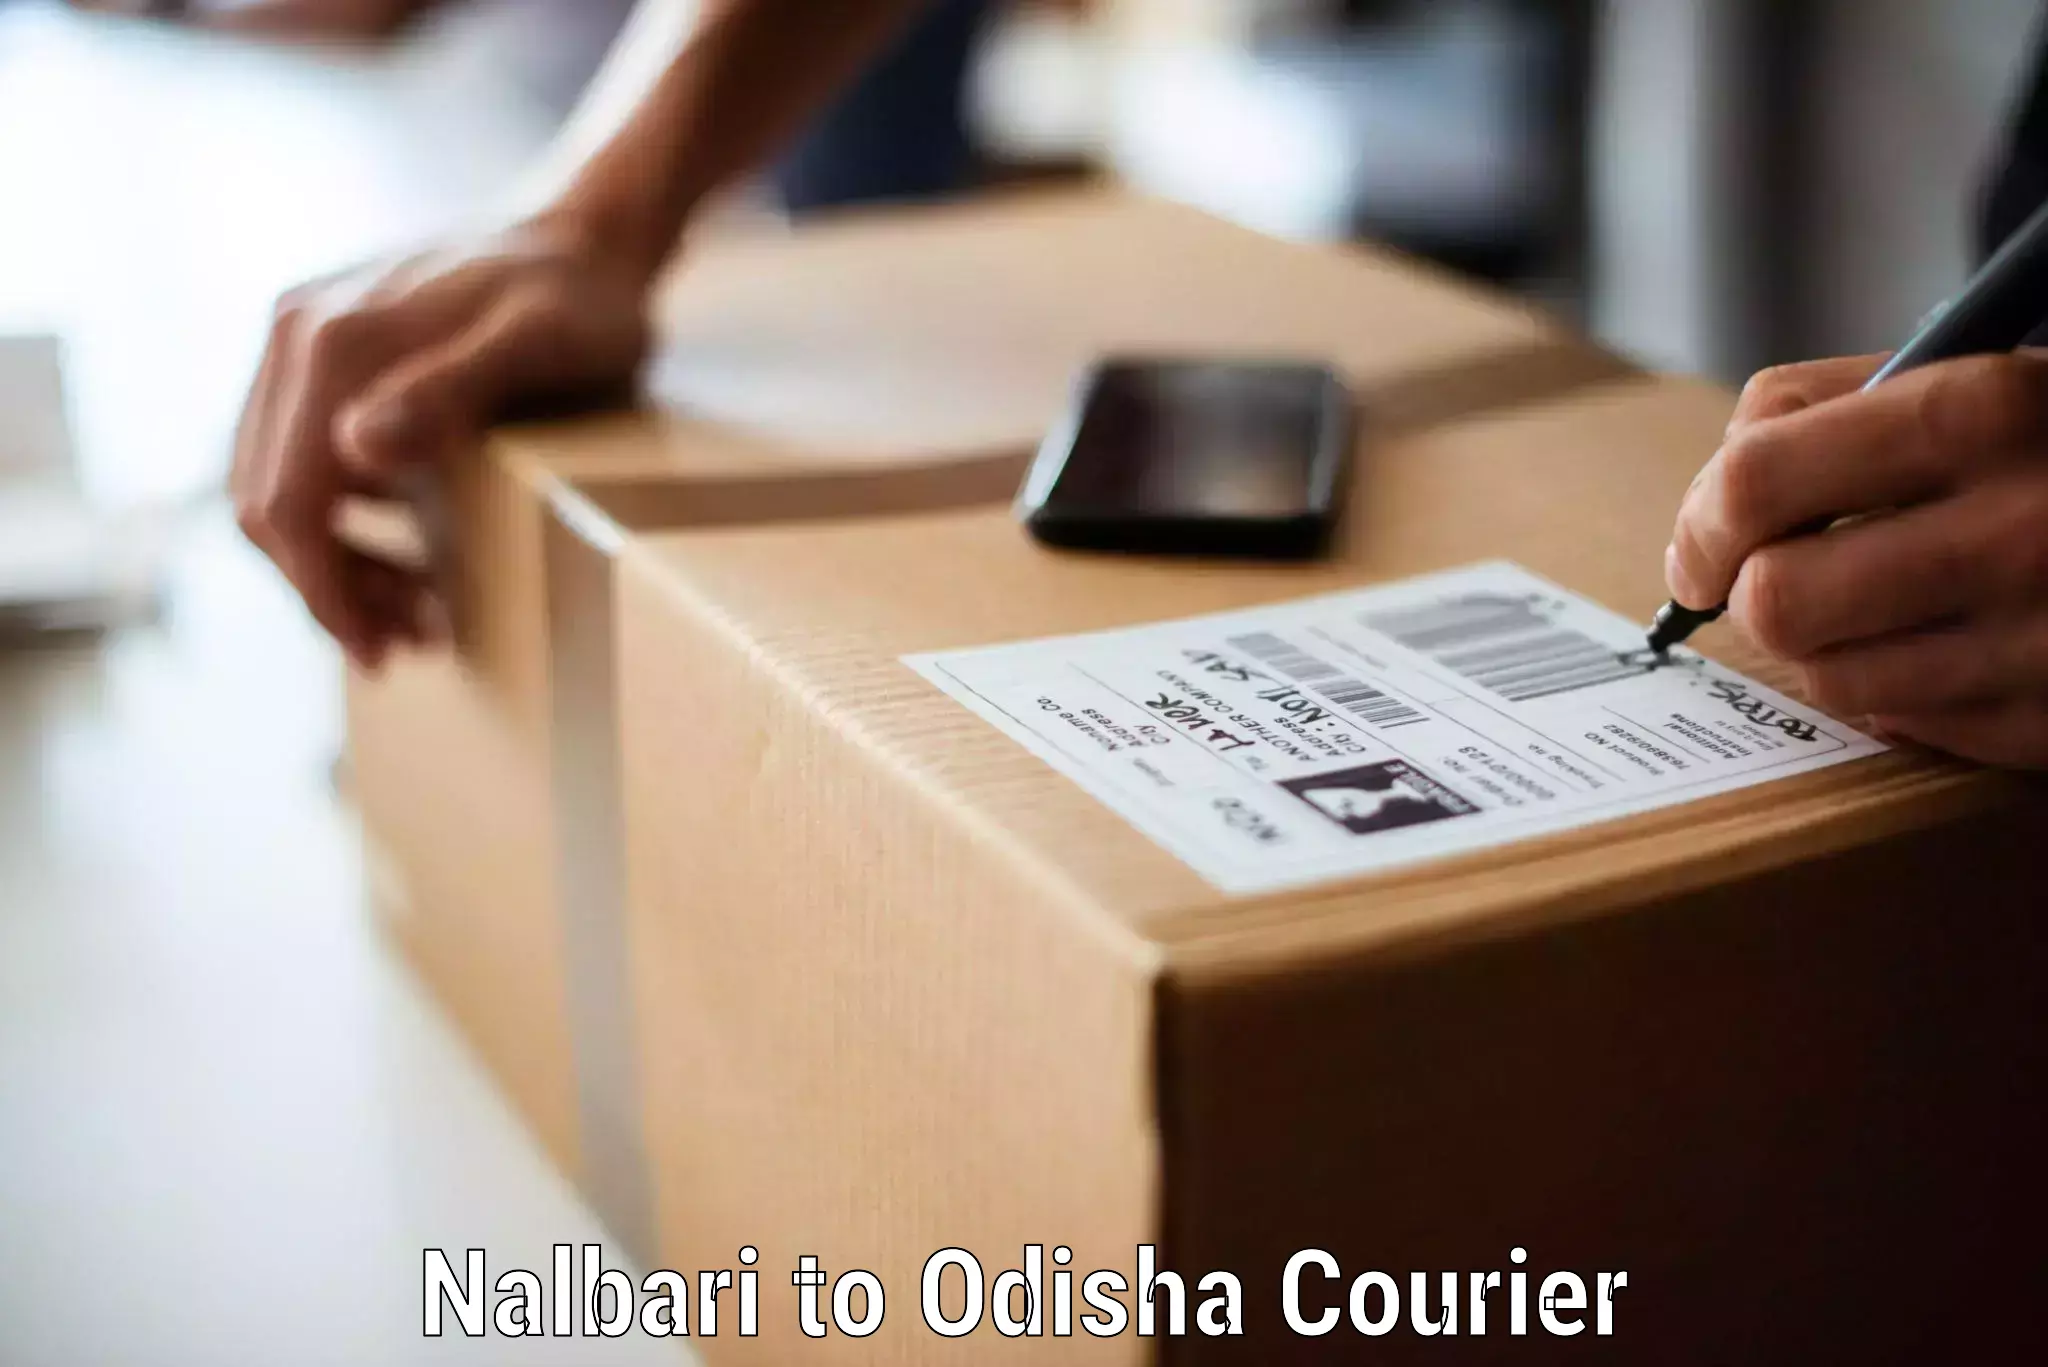 Trusted relocation experts Nalbari to Odisha